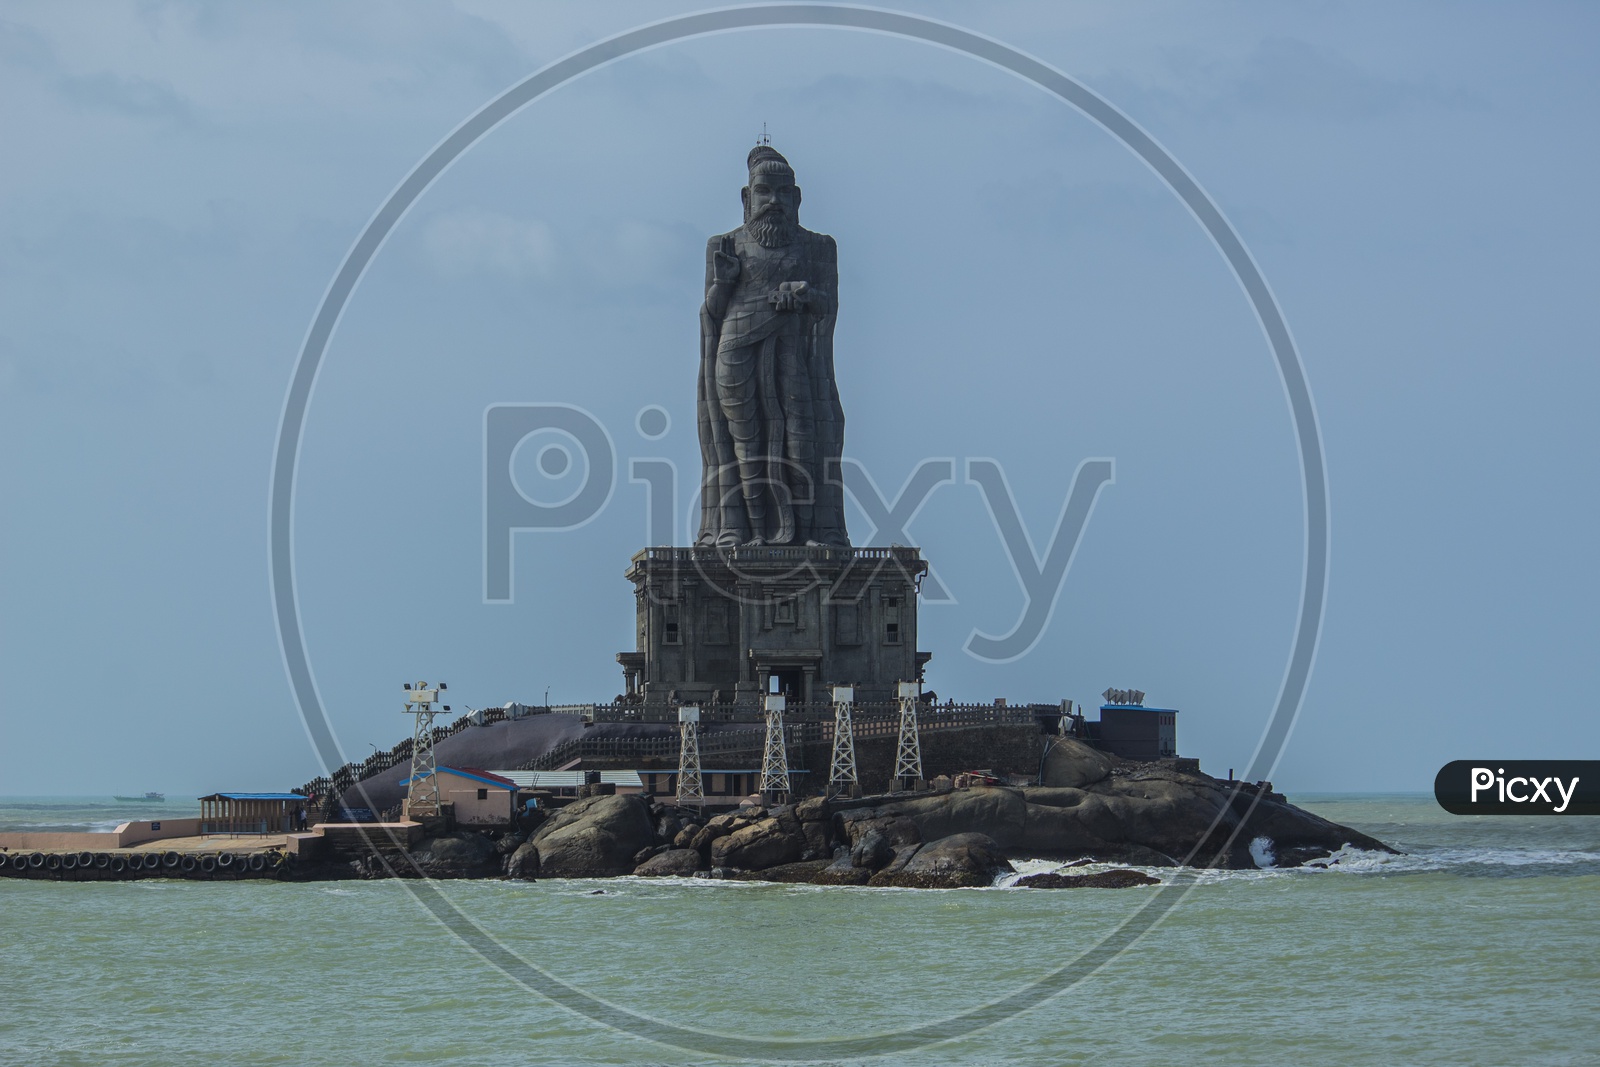 The Thiruvalluvar Statue